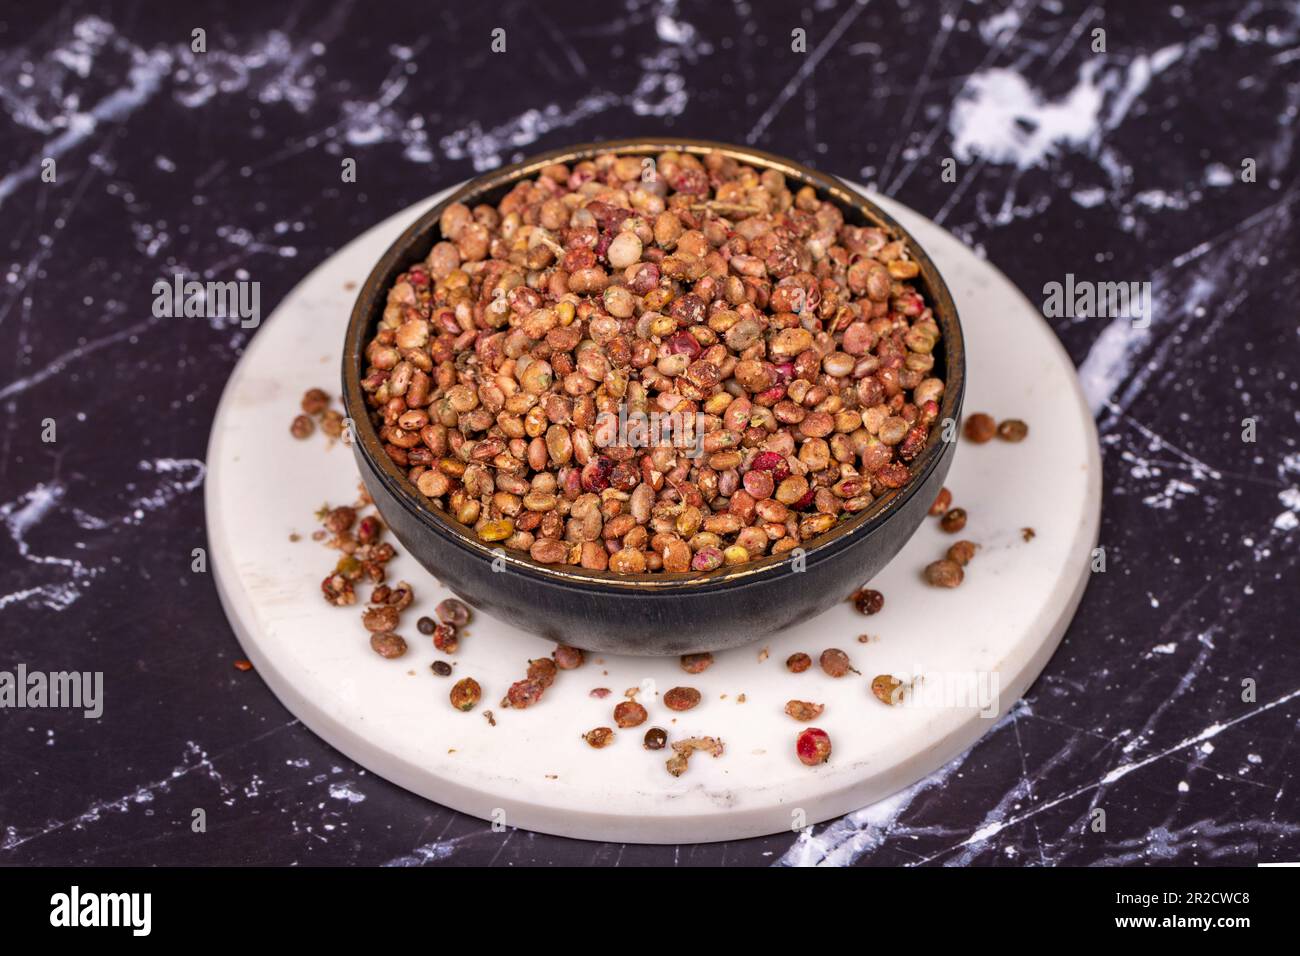 Sumac seeds. Dried sumac berries on dark background. Spice concept Stock Photo